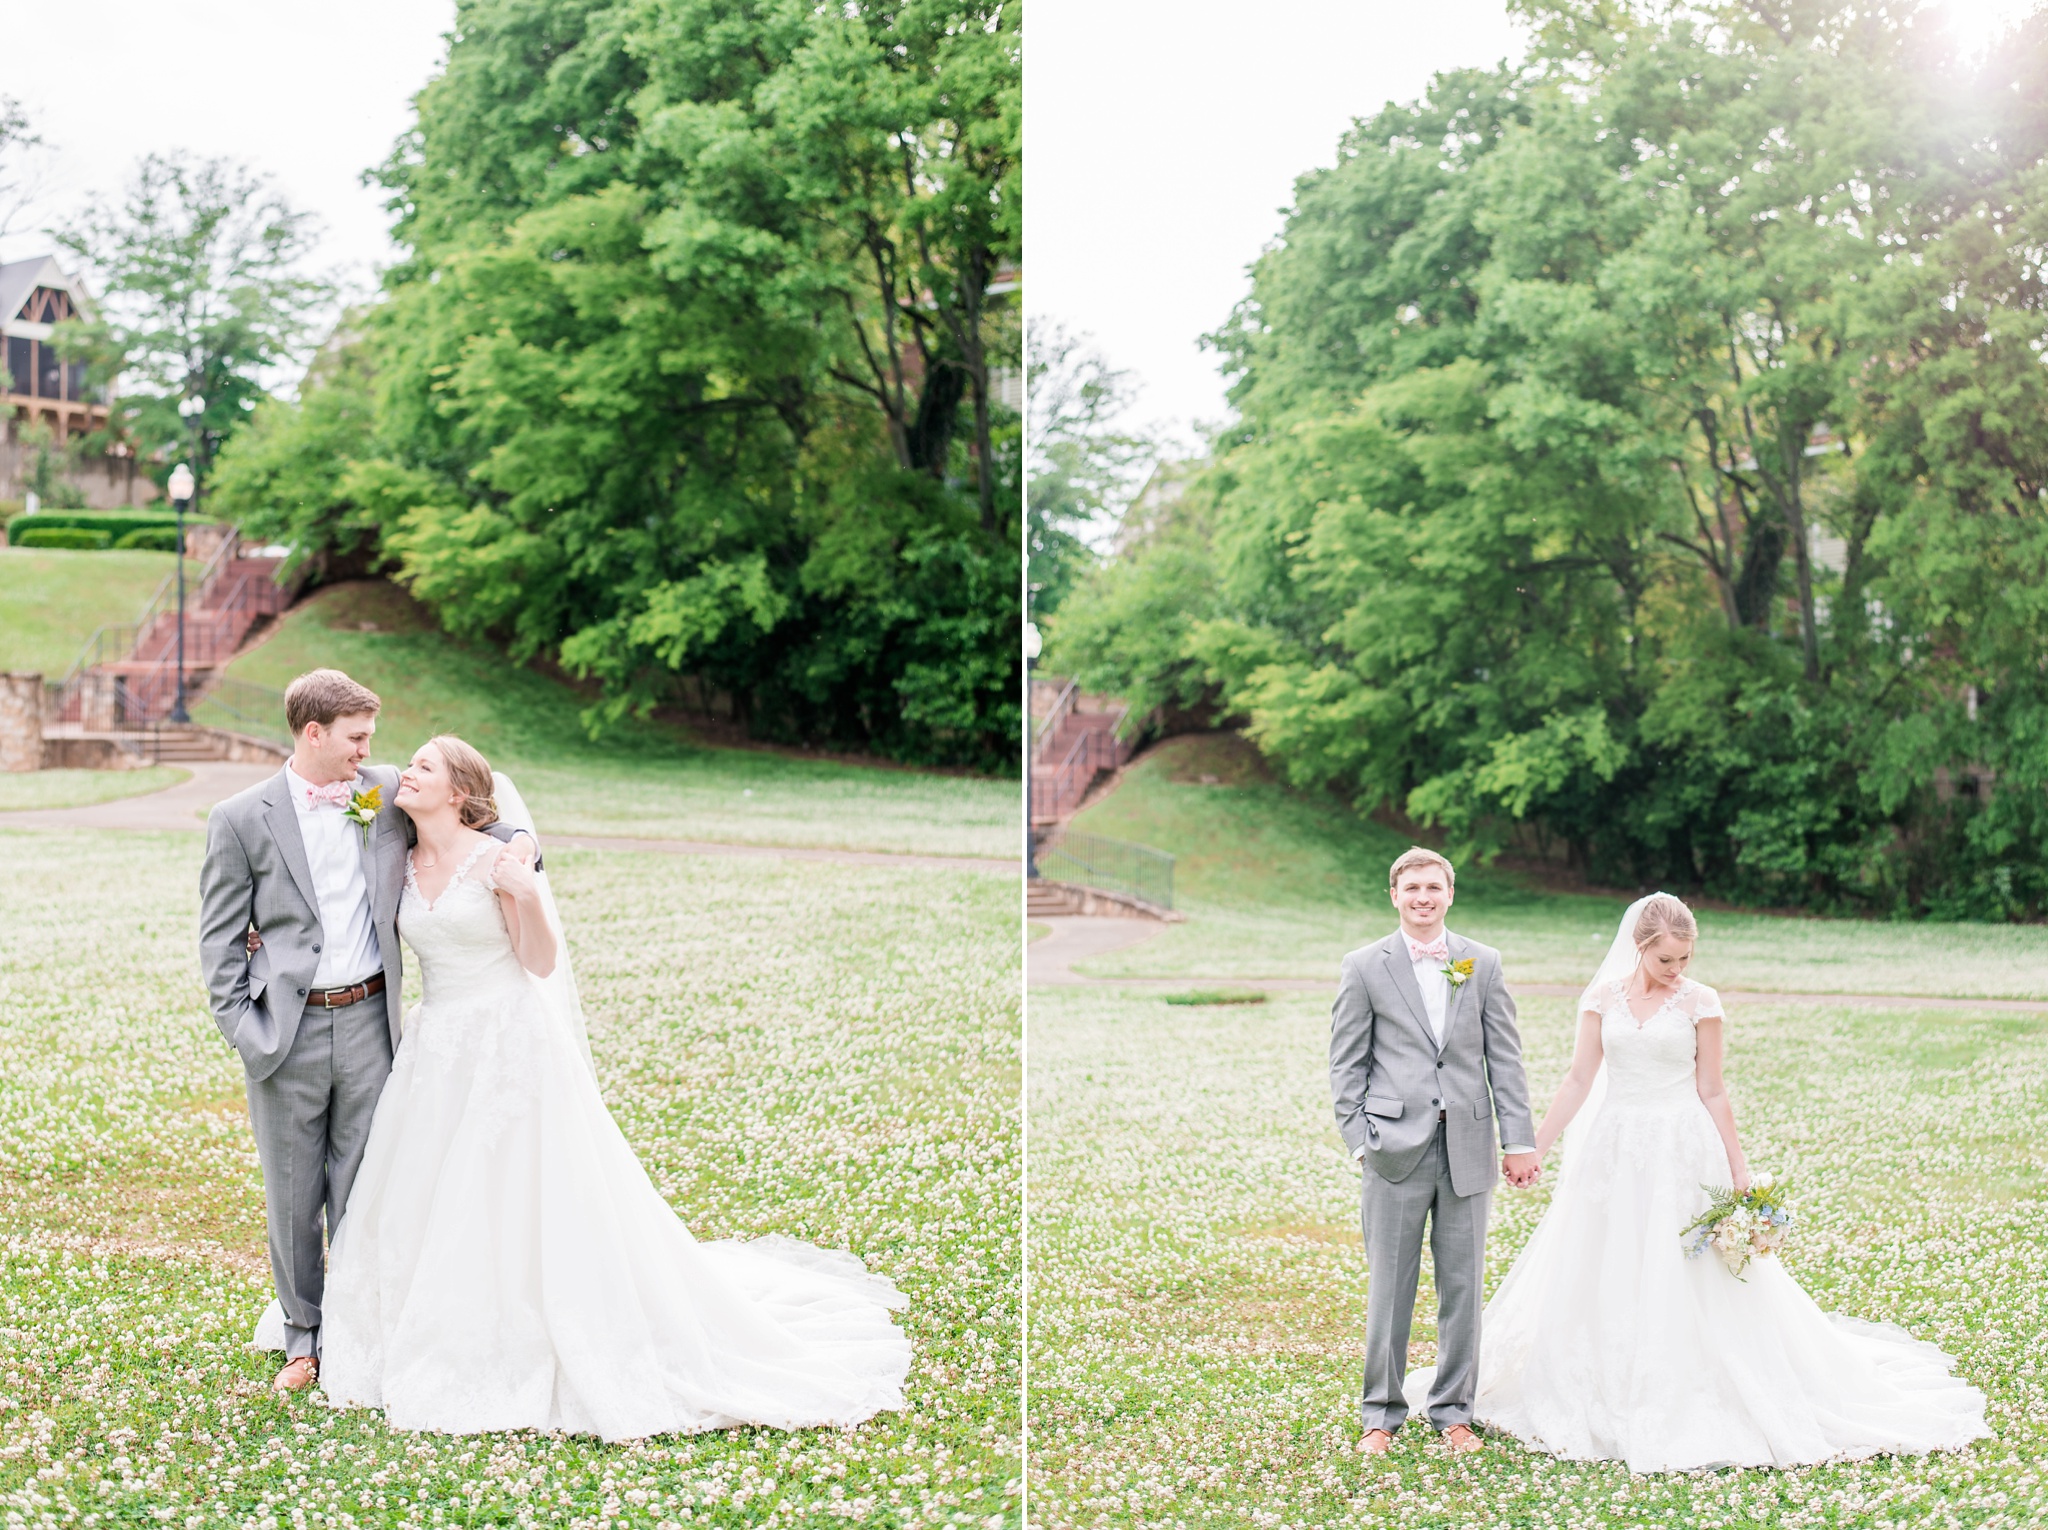 Briarwood Caroline House Blush Spring Garden Wedding | Birmingham Alabama Wedding Photographers_0051.jpg